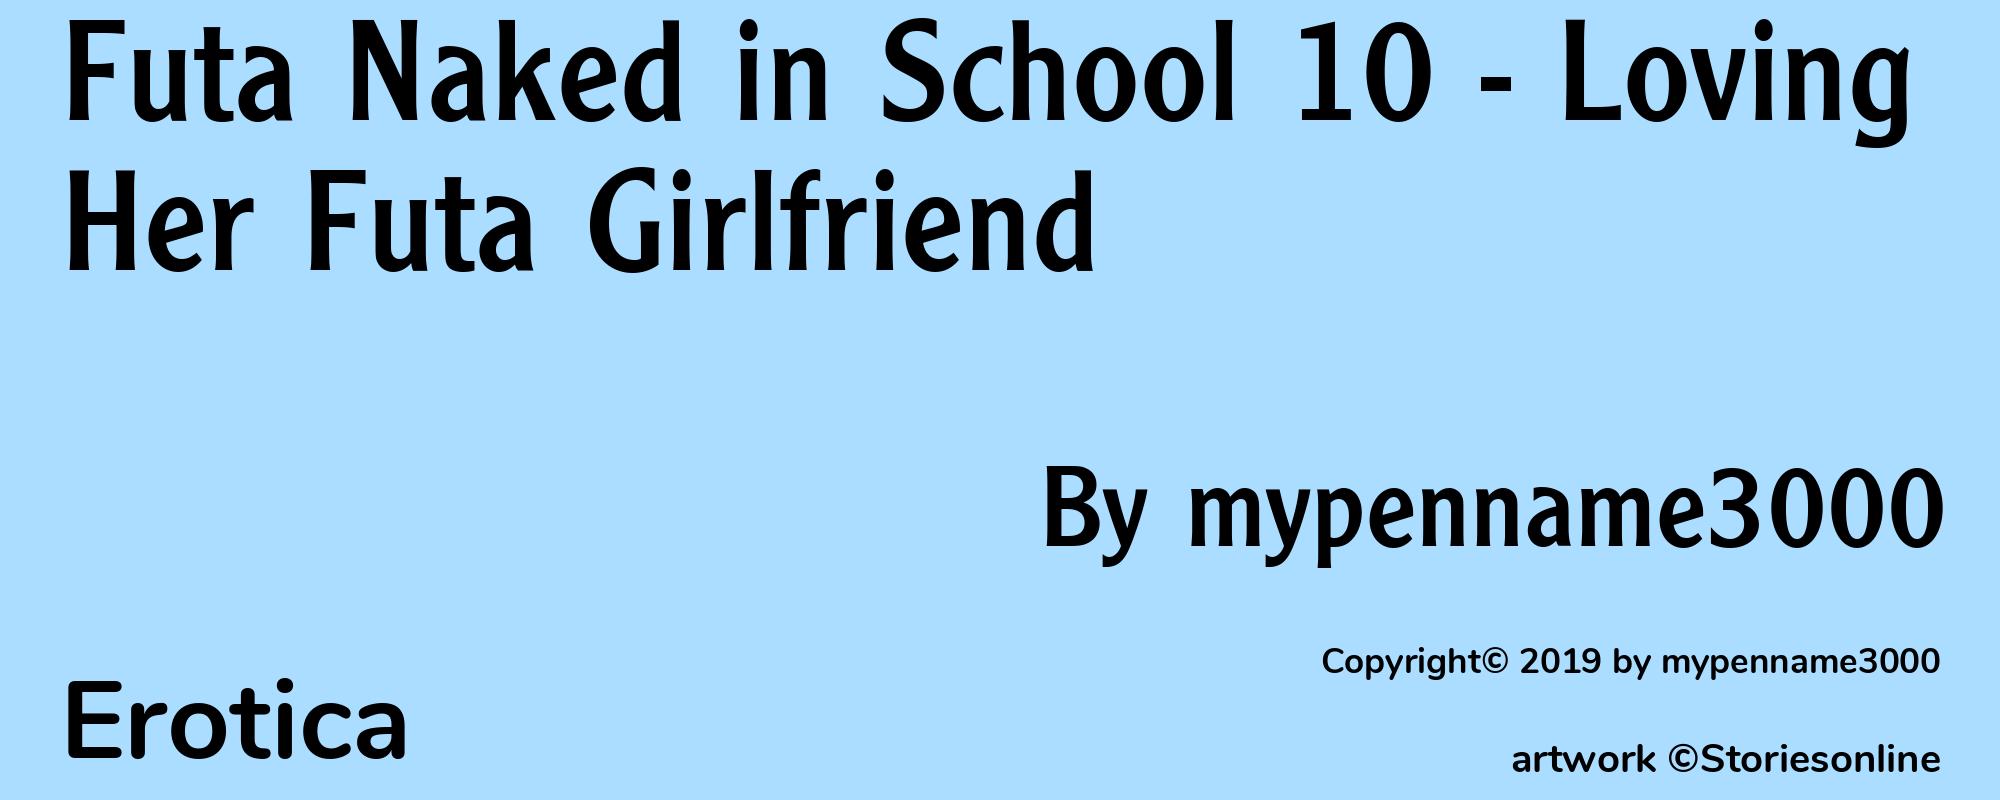 Futa Naked in School 10 - Loving Her Futa Girlfriend - Cover